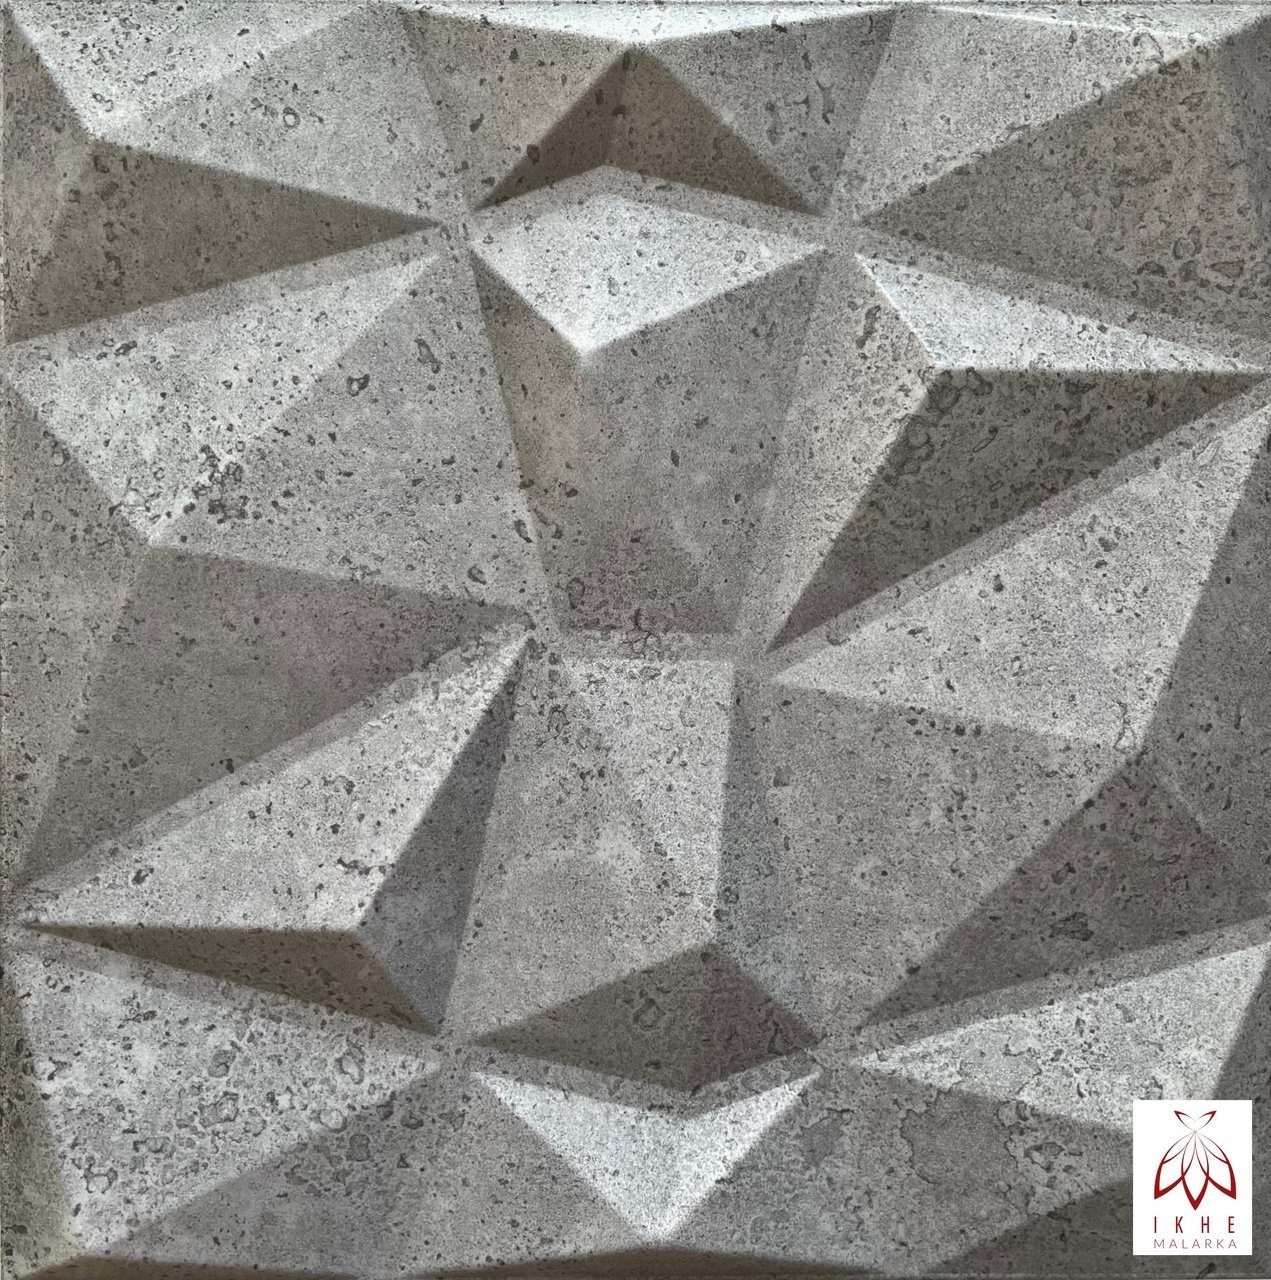 IKHEMalarka 3D Wandpaneel 4m²/16PCS Wandverkleidung Deckenpaneele POLYSTYROL Betonlook, BxL: 50,00x50,00 cm, 0,50 qm Diamant 43